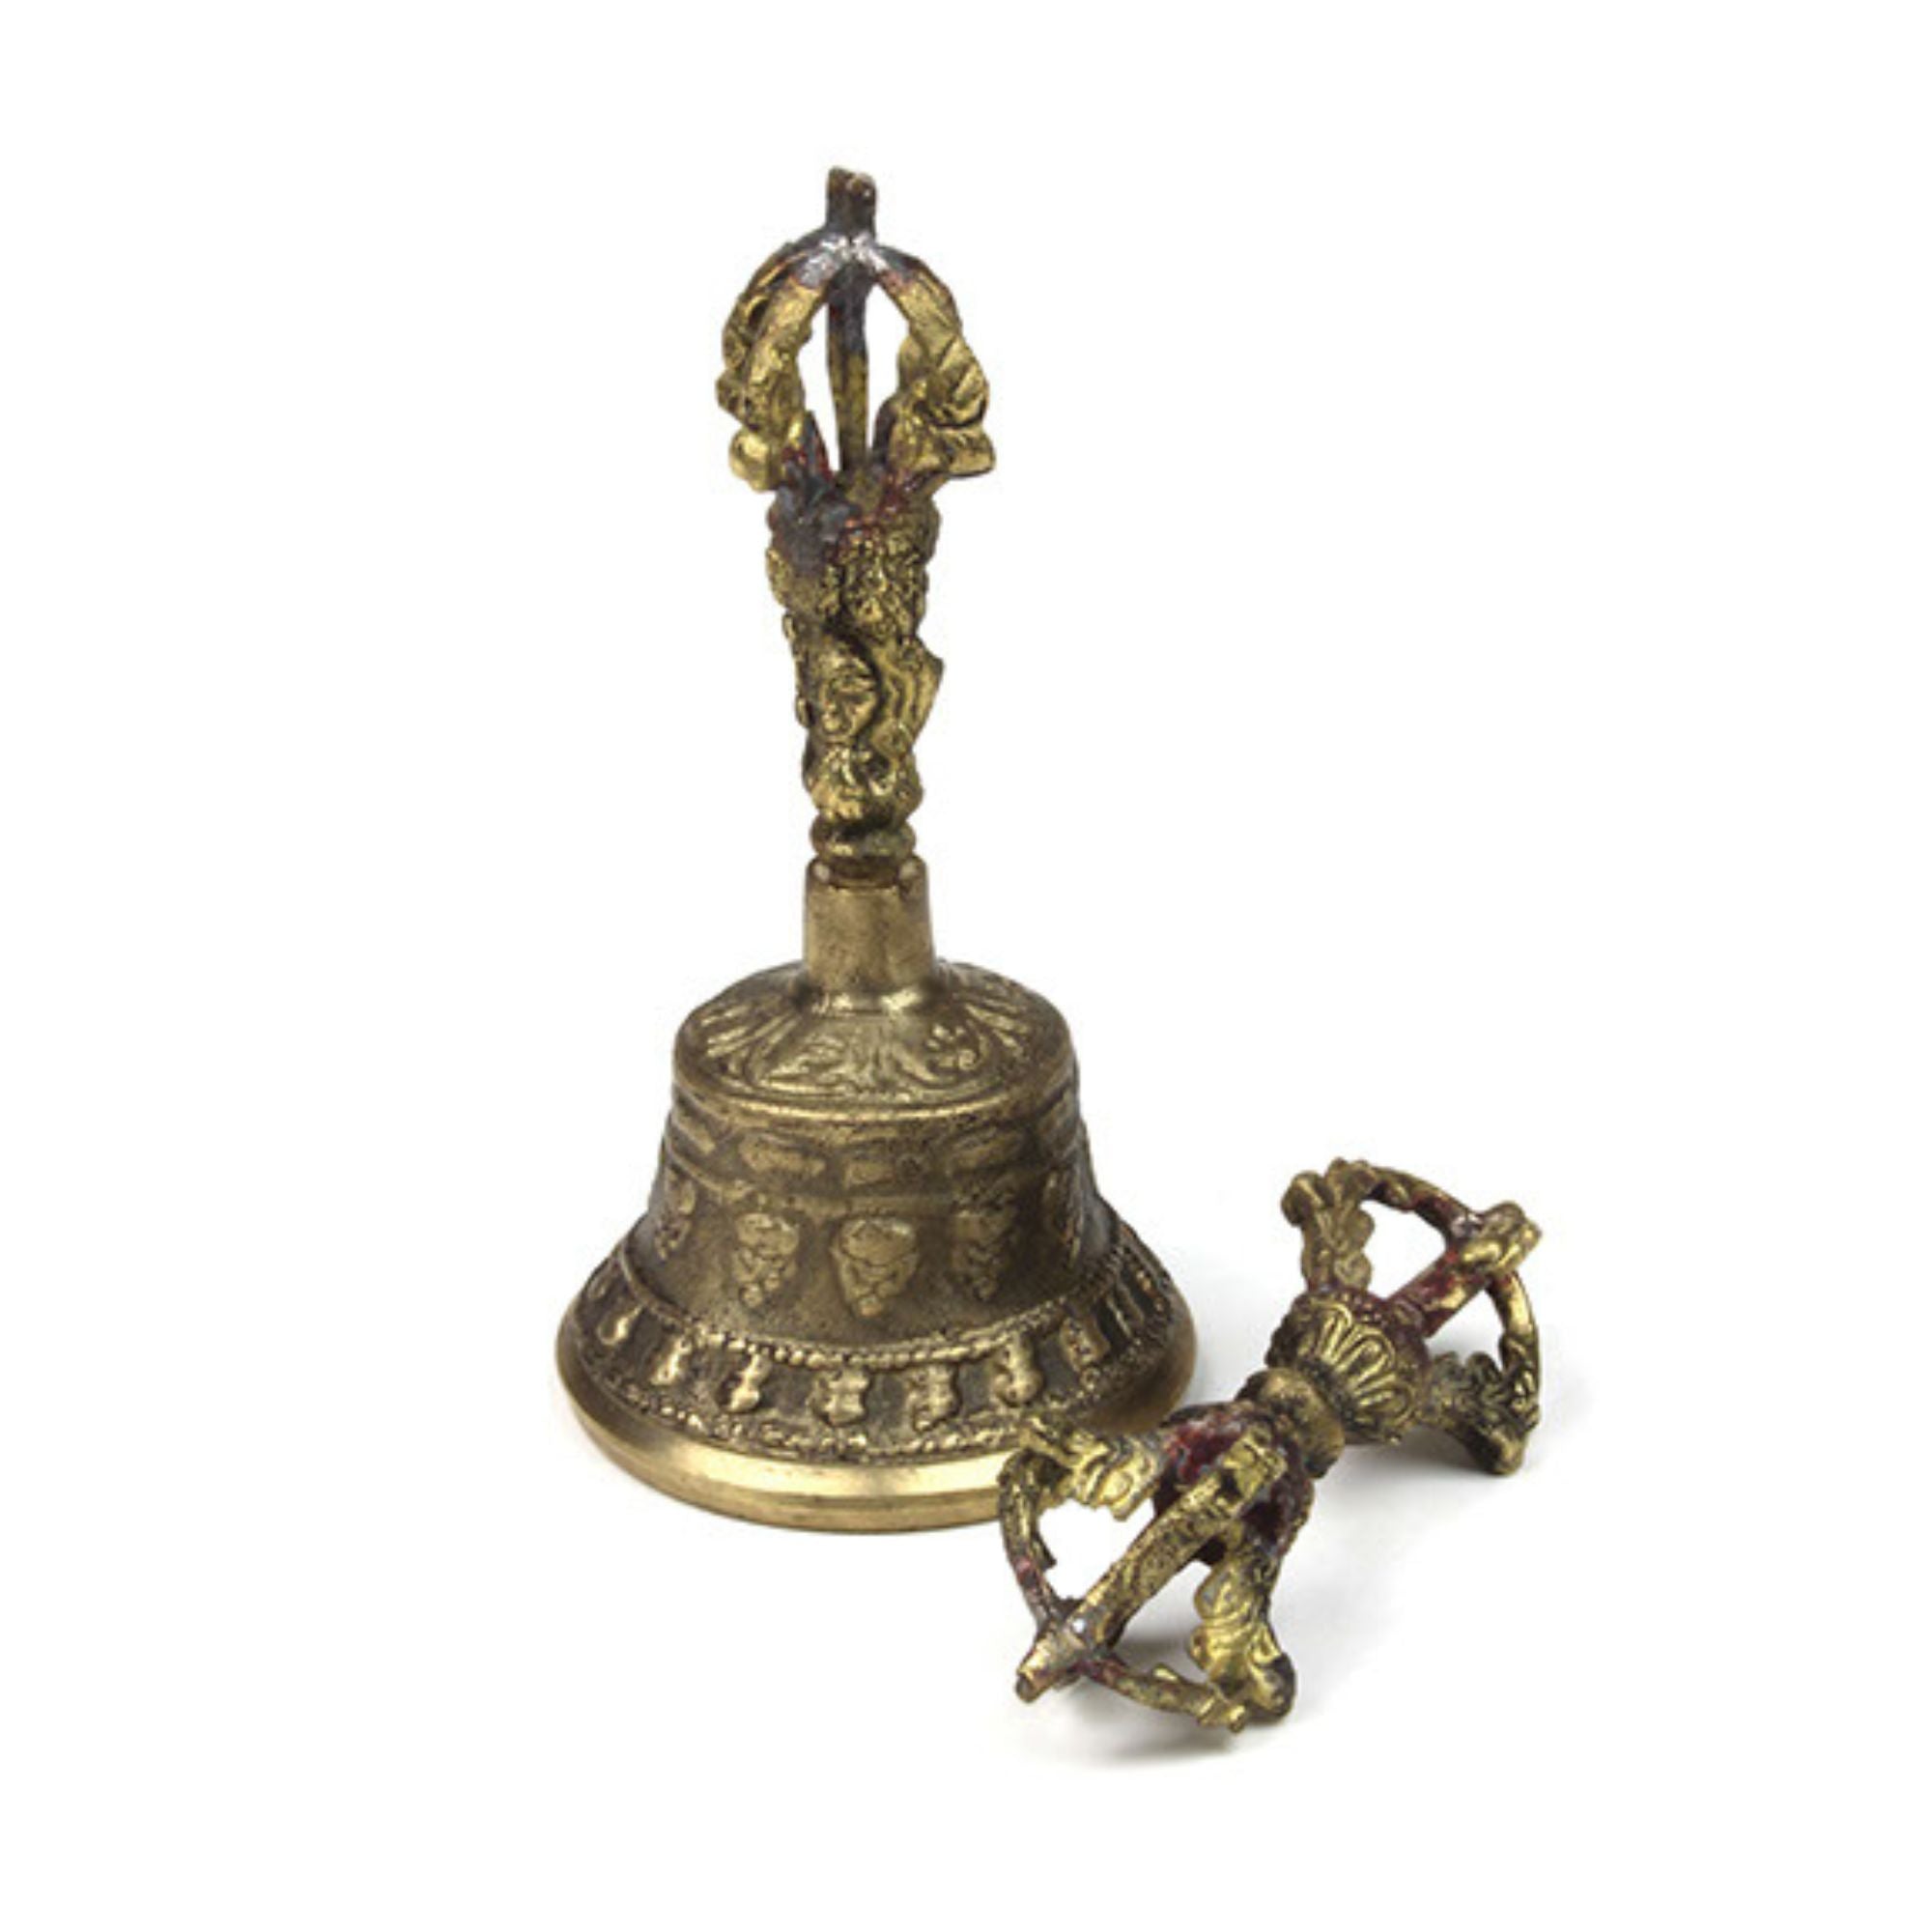 Brass ritual ghanta bell with dorje